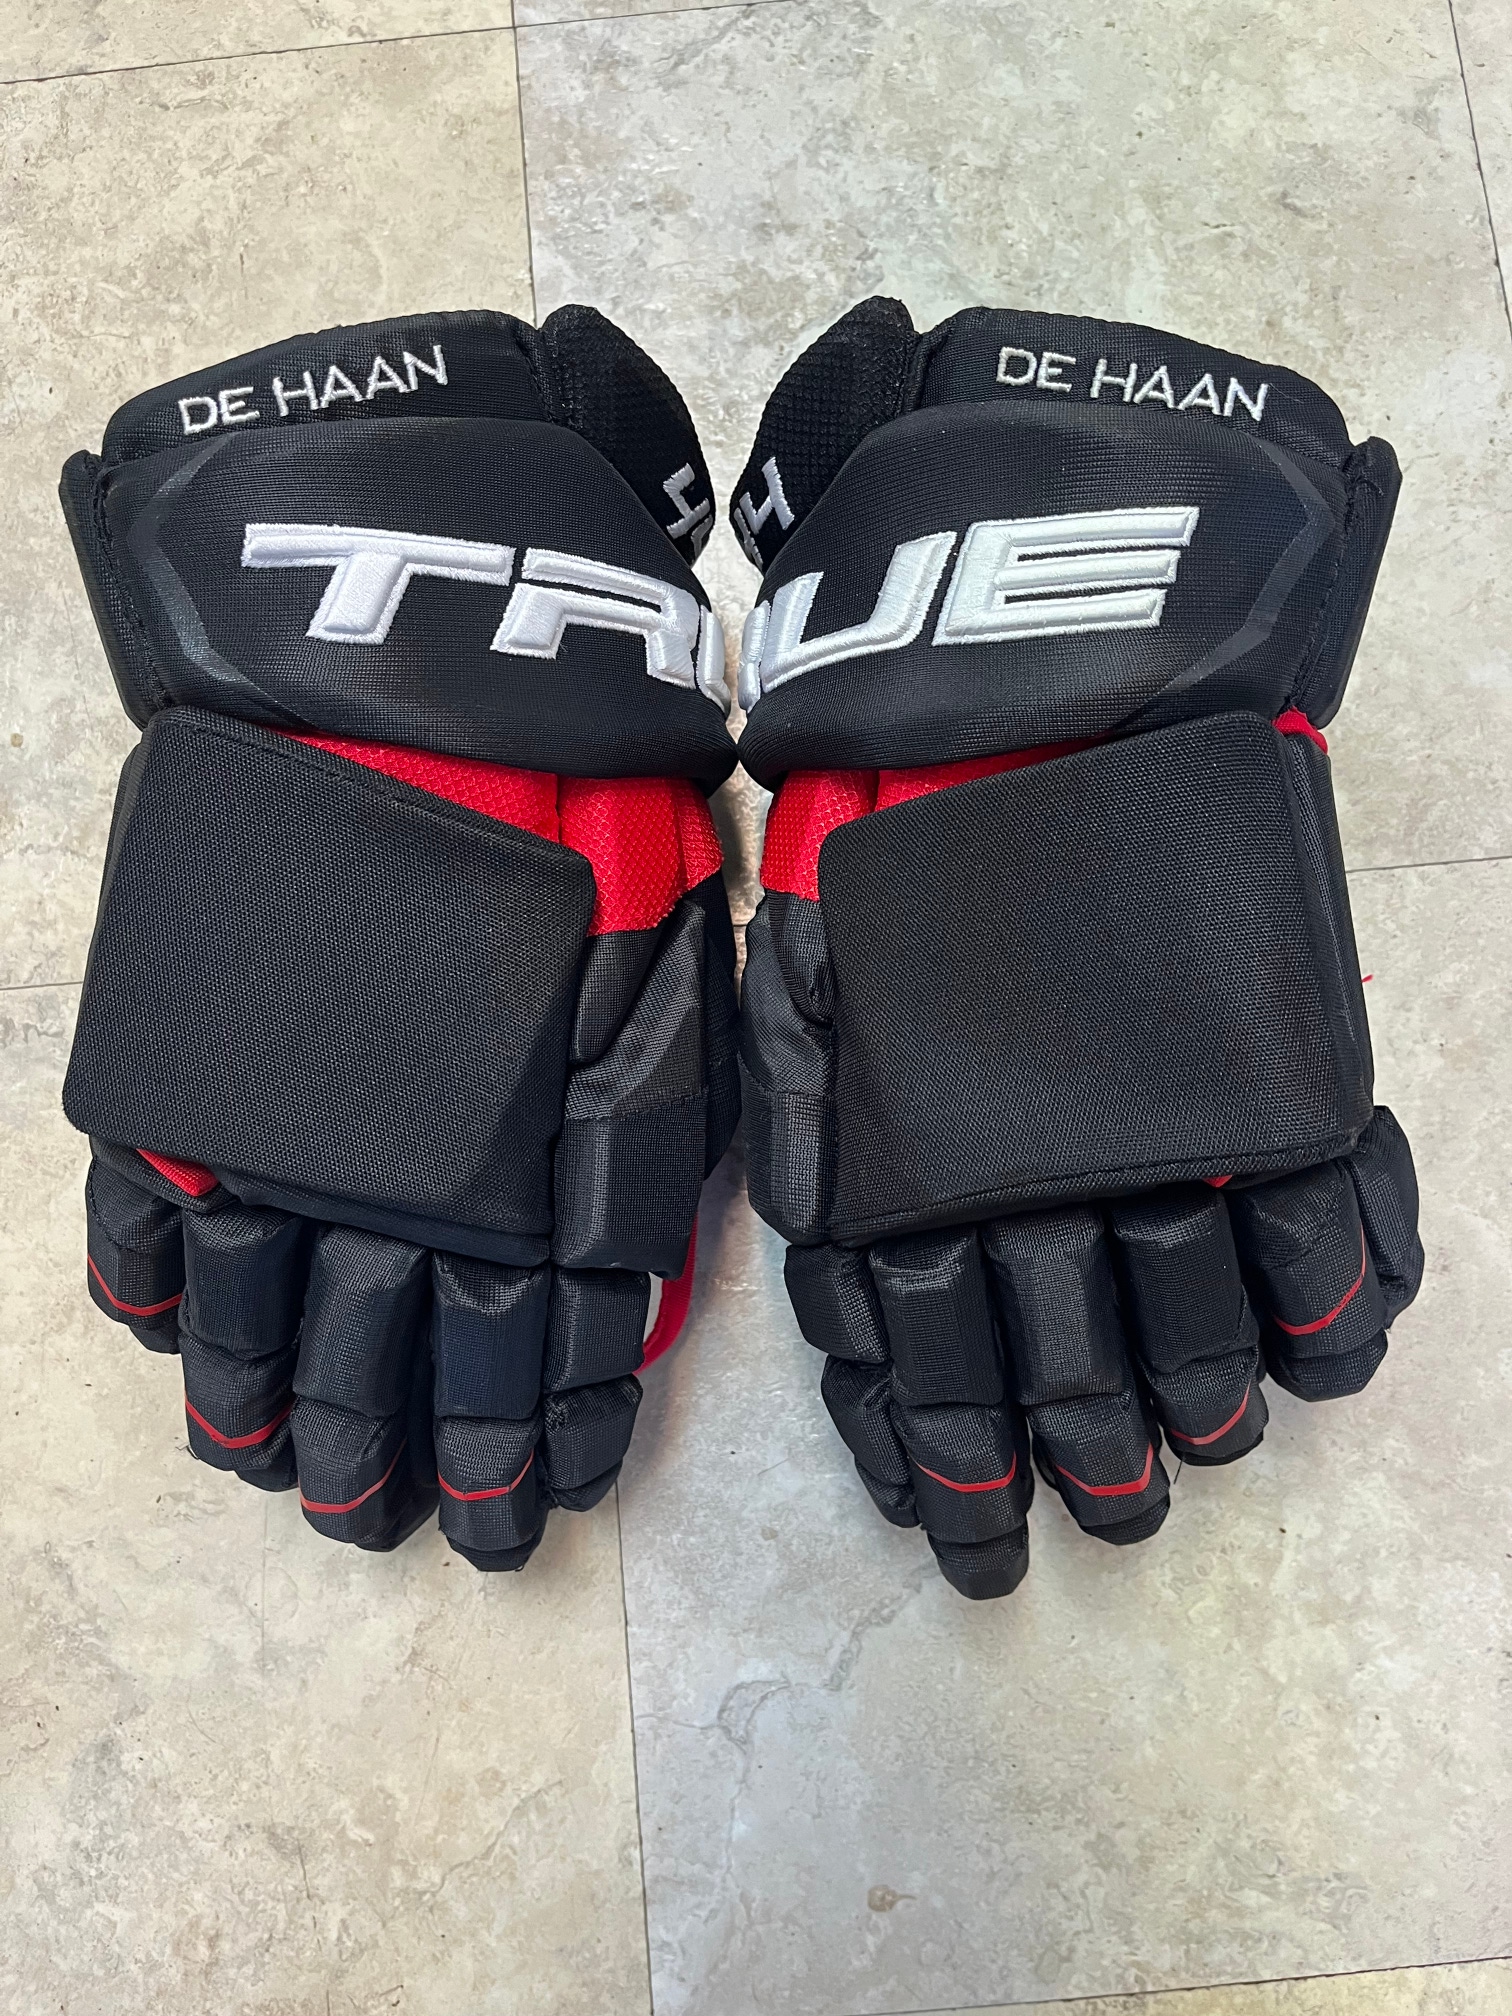 Pro Stock True Catalyst 9x Gloves, Blackhawks 15" used